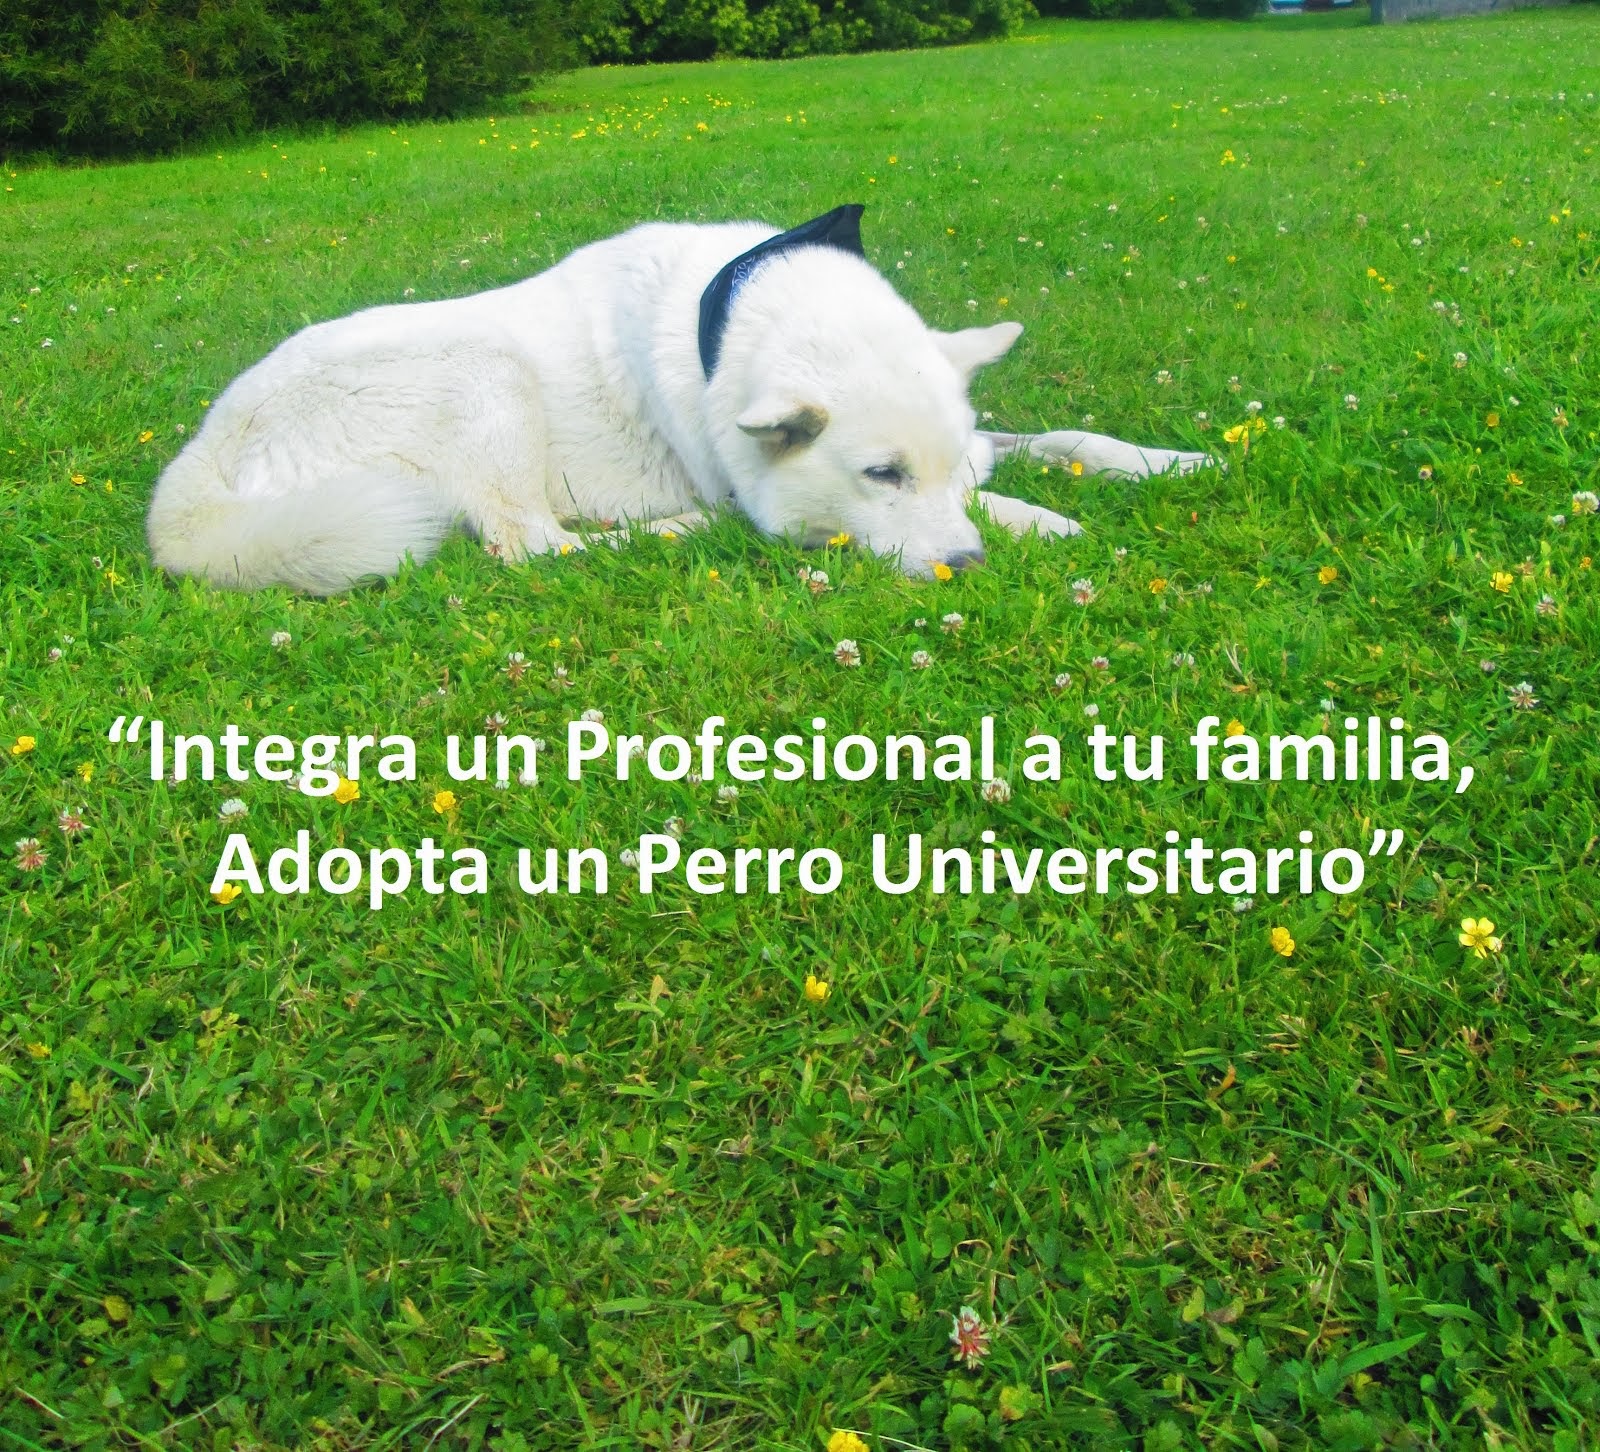 “Integra un Profesional a tu familia, Adopta un Perro Universitario”